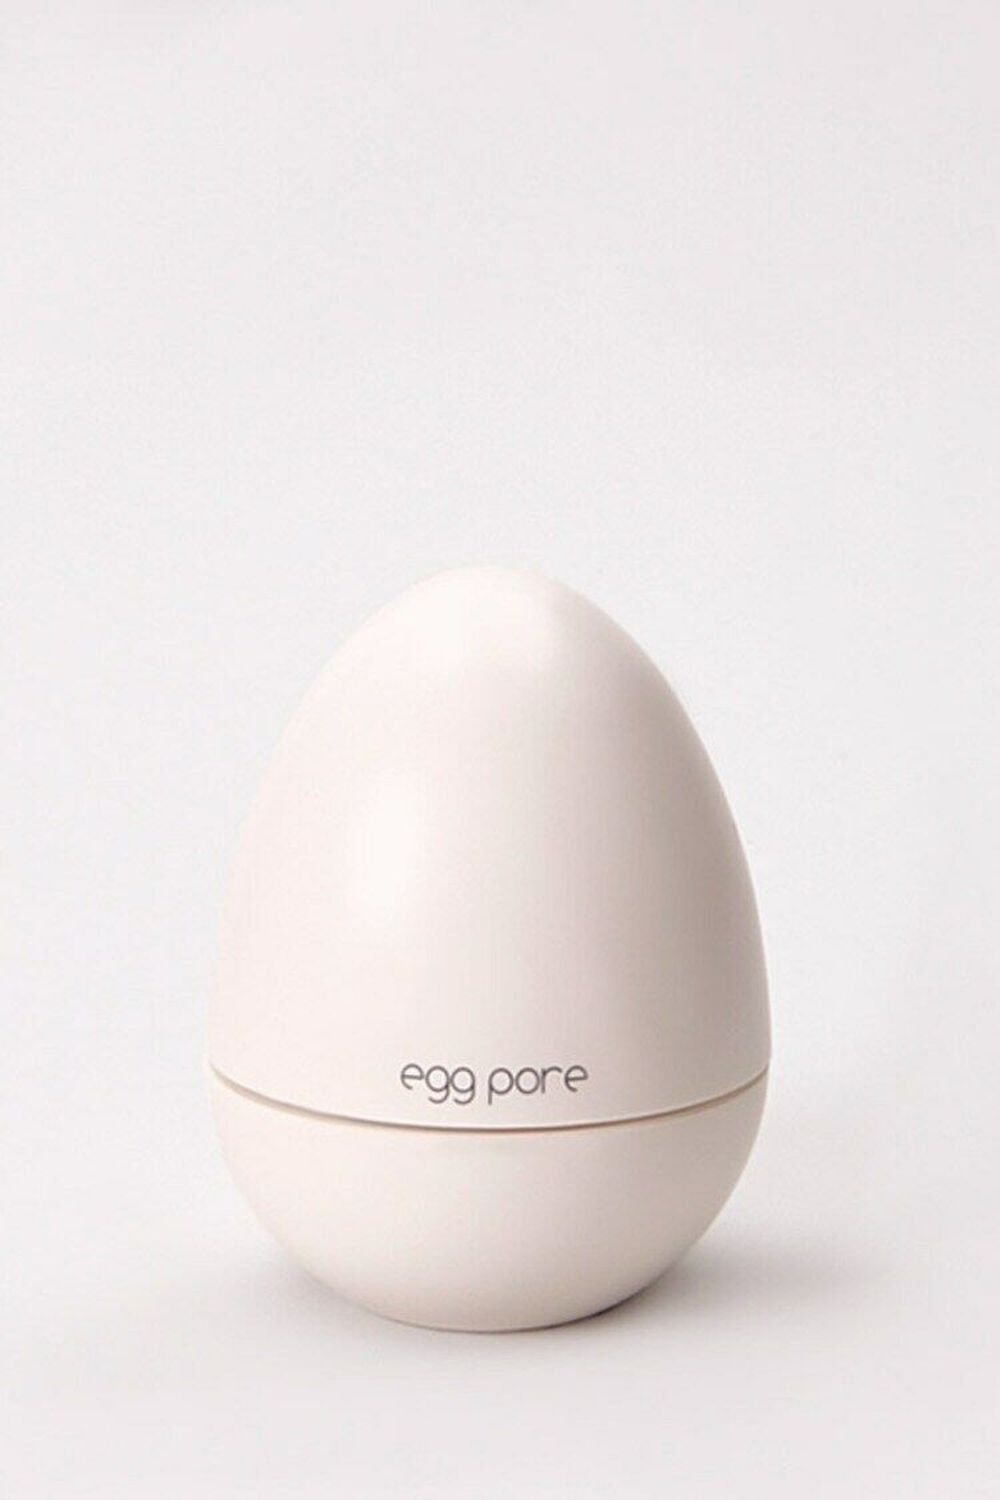 YELLOW Egg Pore Blackhead Steam Balm, image 1